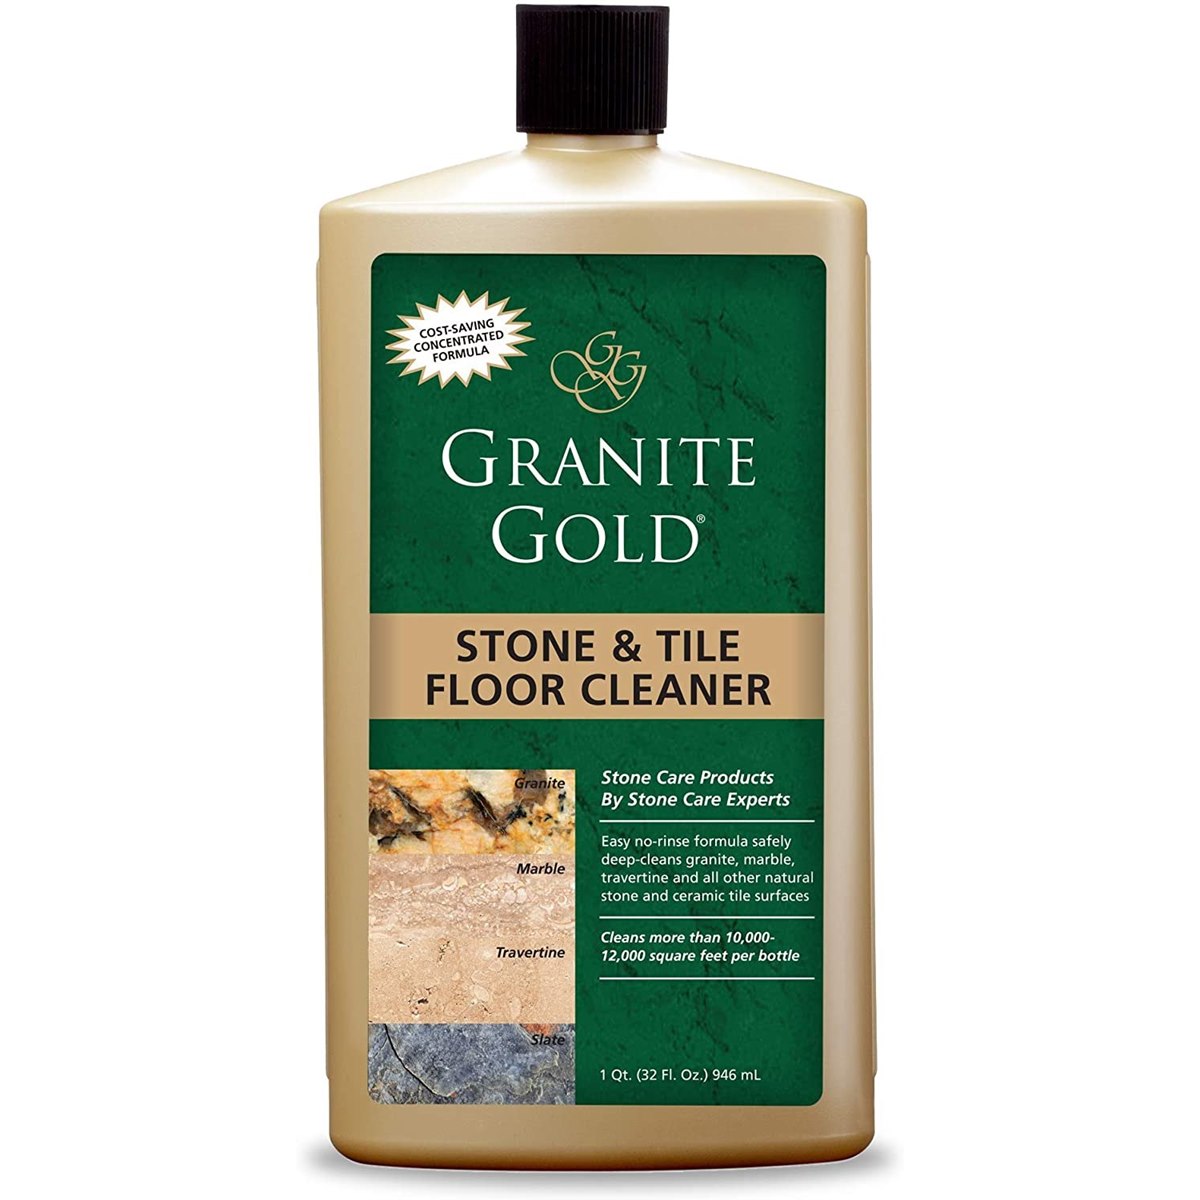 Granite Gold Stone and Tile Floor Cleaner 946ml